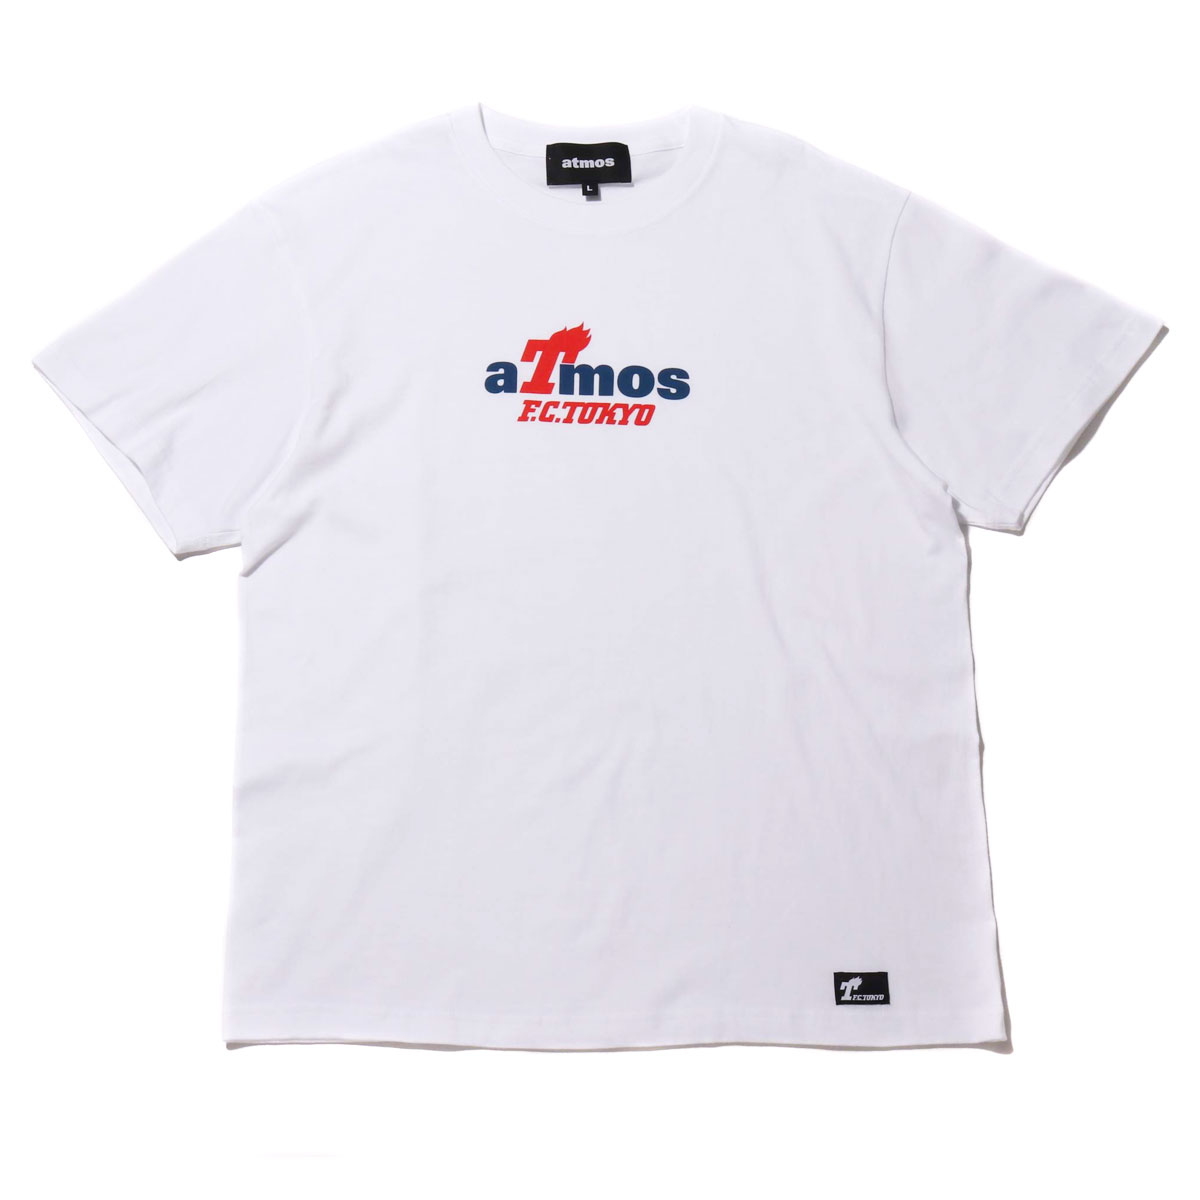 atmos x FC TOKYO T-LOGO TEE(WHITE)(アトモス エフシートウキョウ ティーロゴ ティー)【メンズ】【レディース】【半袖Tシャツ】【20SP-S】